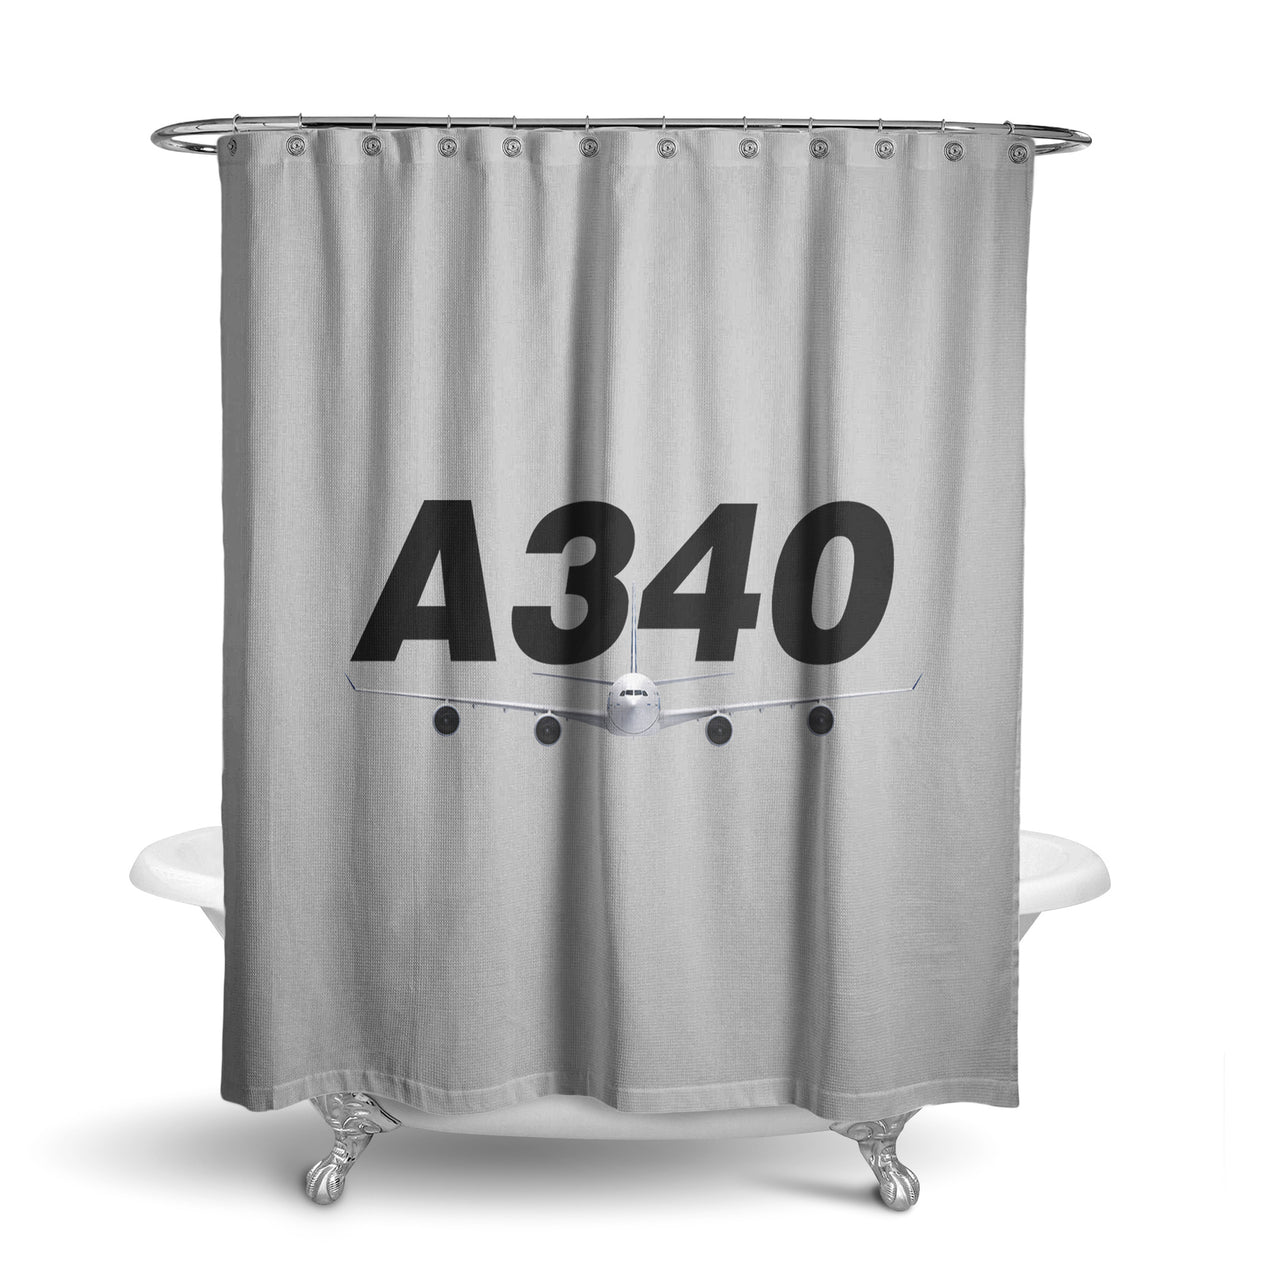 Super Airbus A340 Designed Shower Curtains